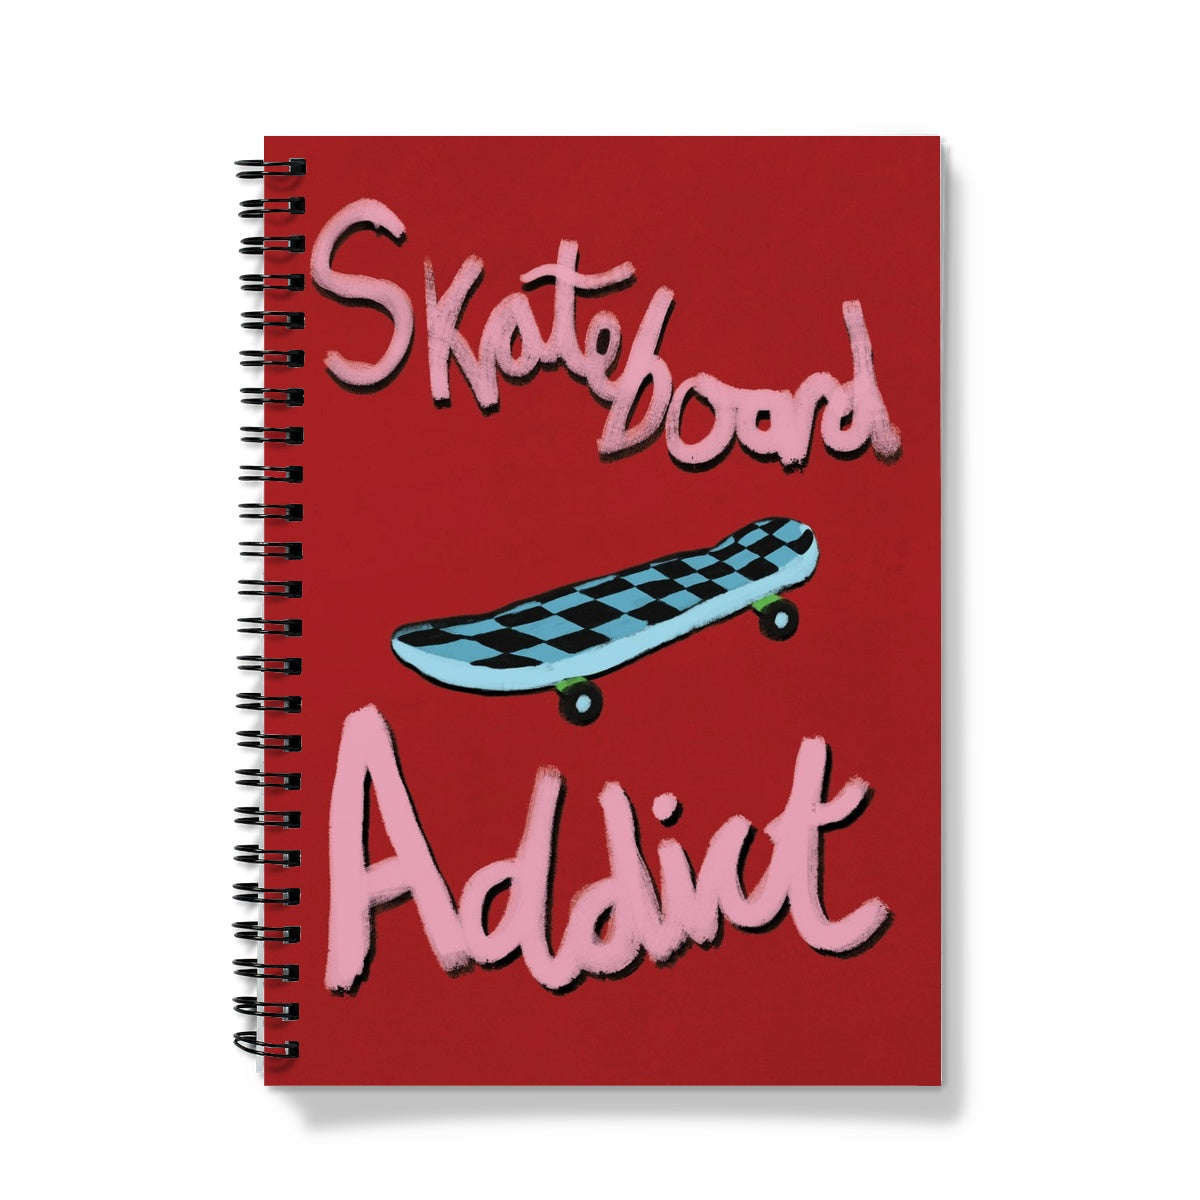 Skateboard Addict - Red, Pink, Blue Notebook